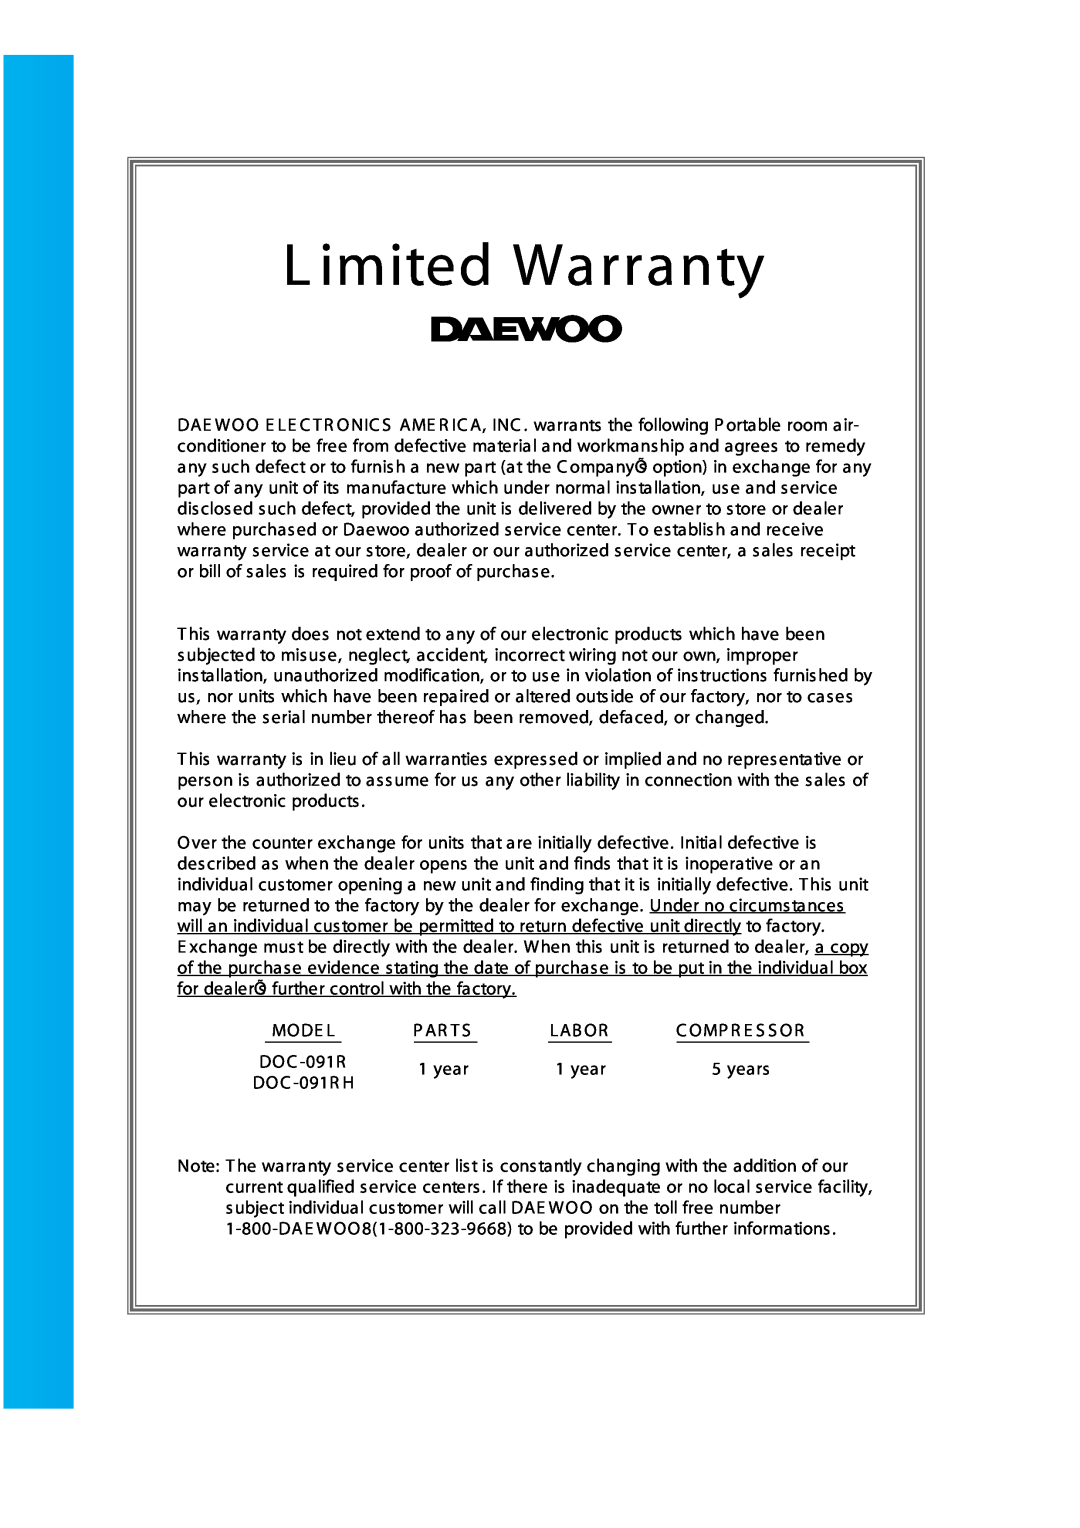 Daewoo DOC-091RH manual L imited Warranty 